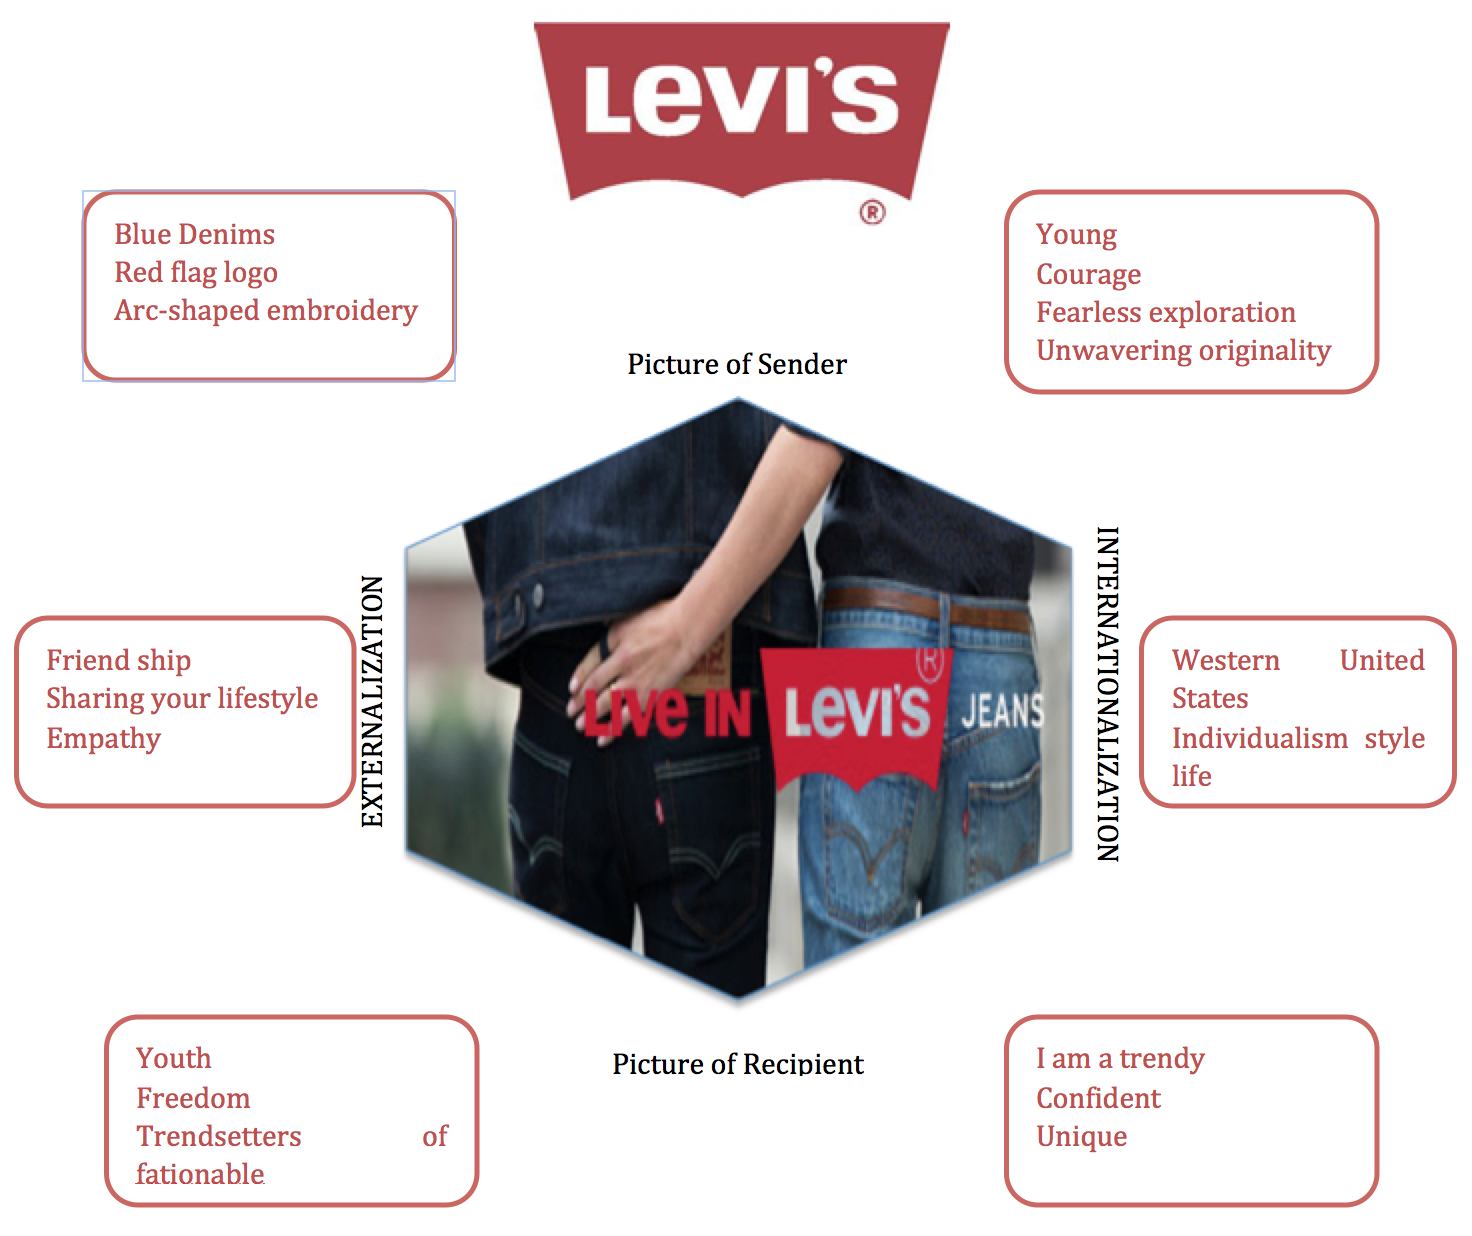 levi's target market